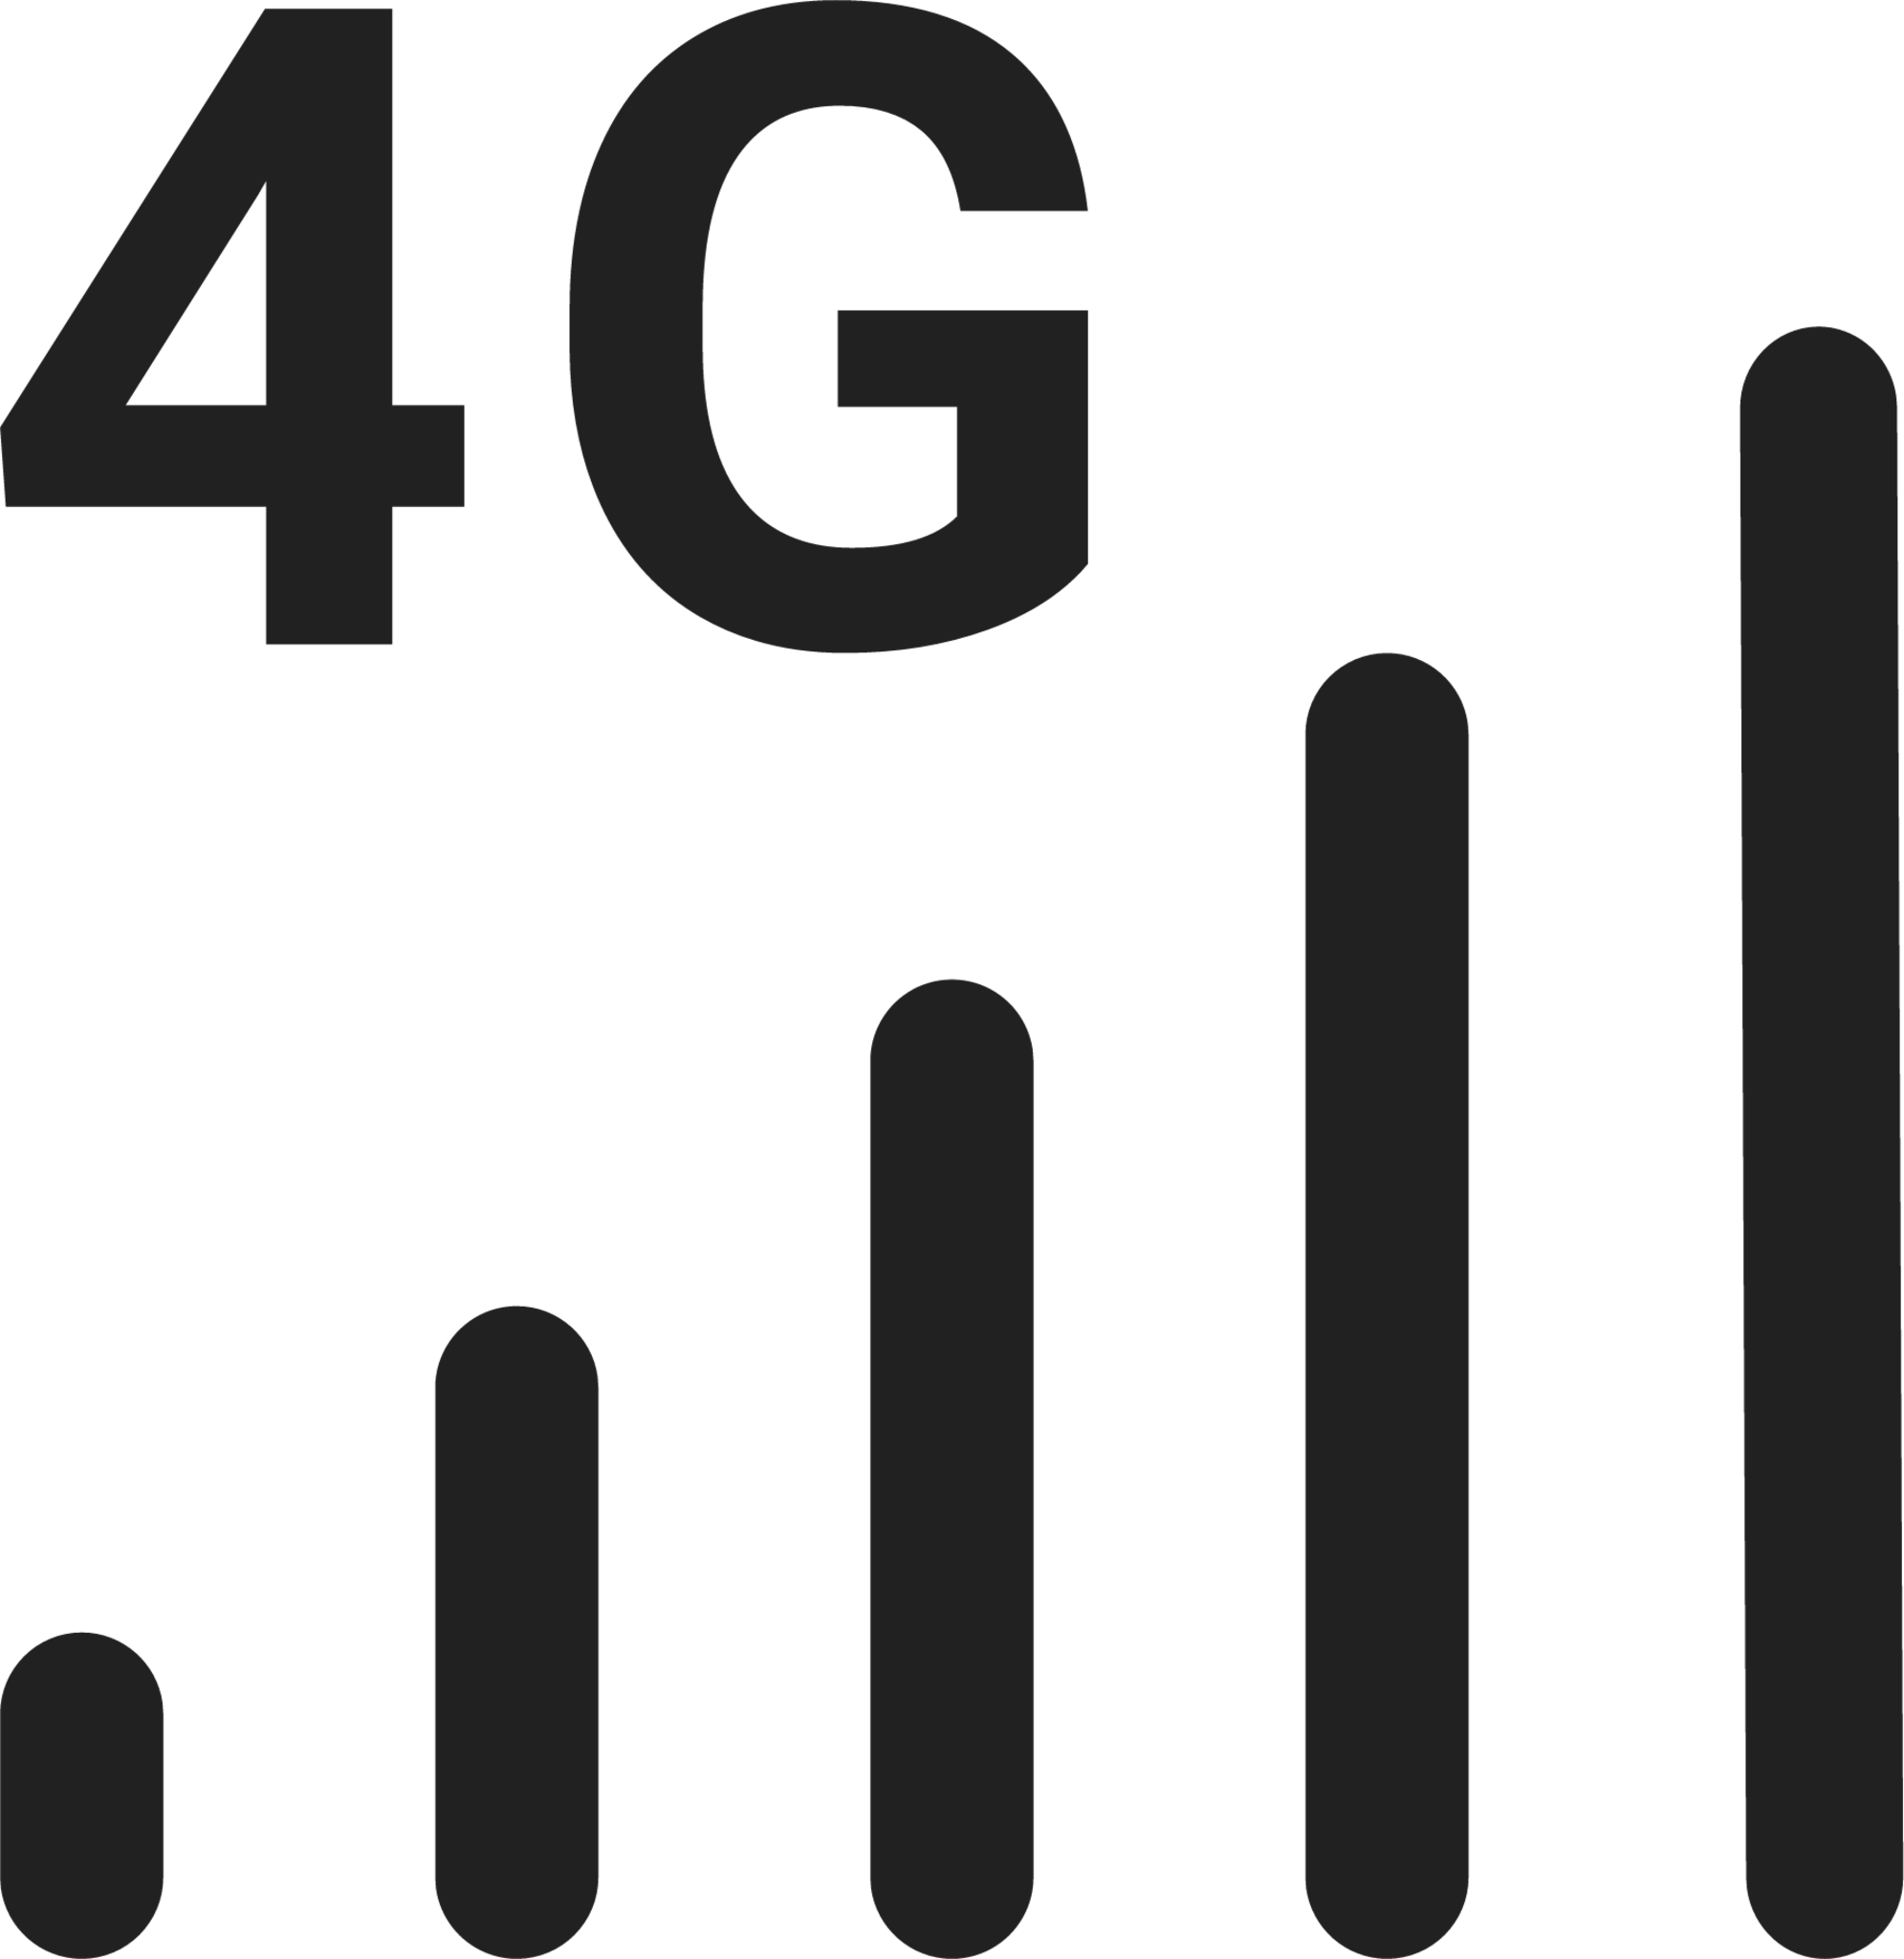 Cellular 4G icon